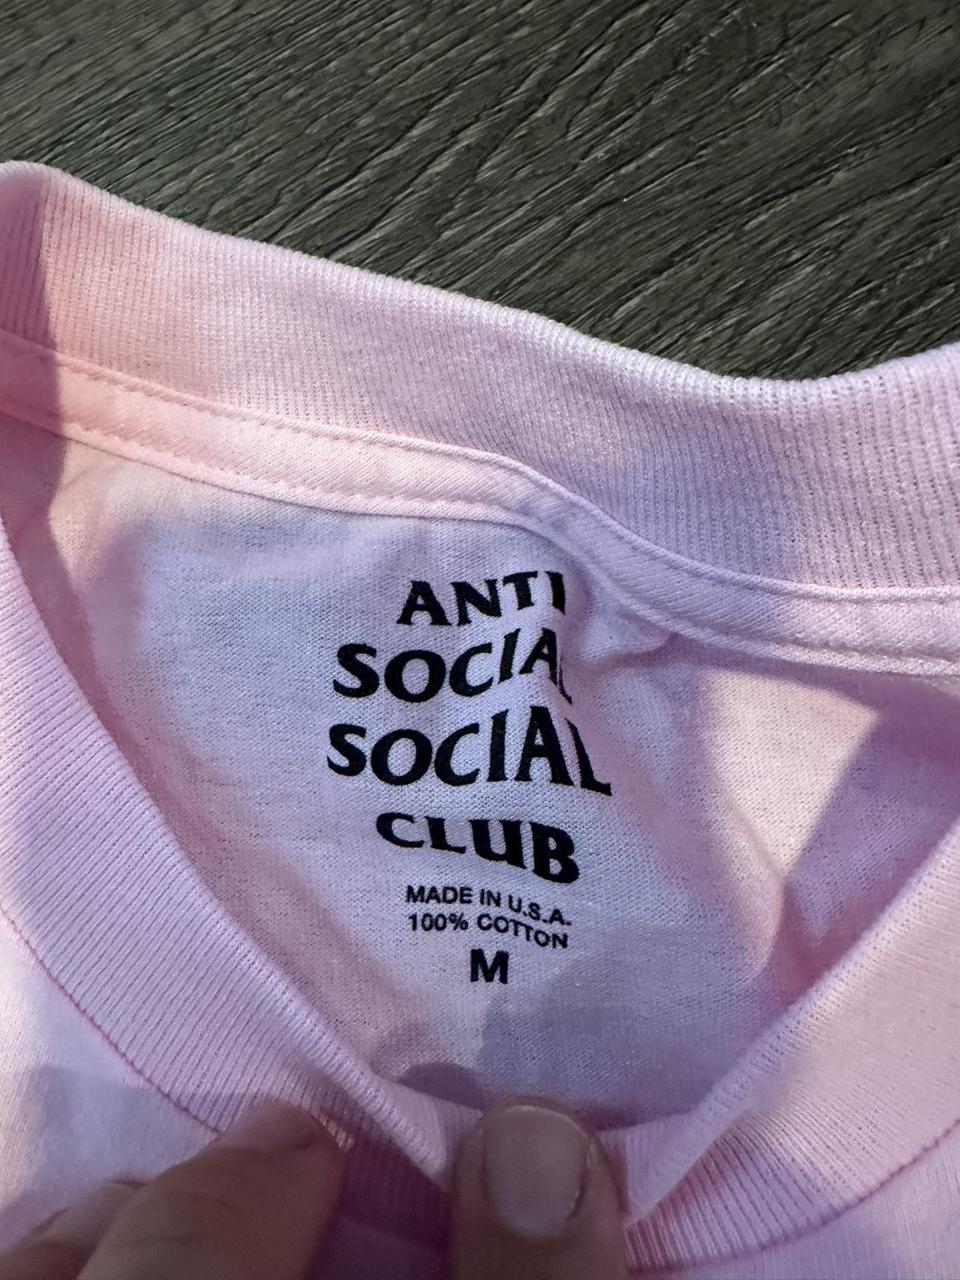 Anti Social Social Club Men's White and Pink T-shirt (3)